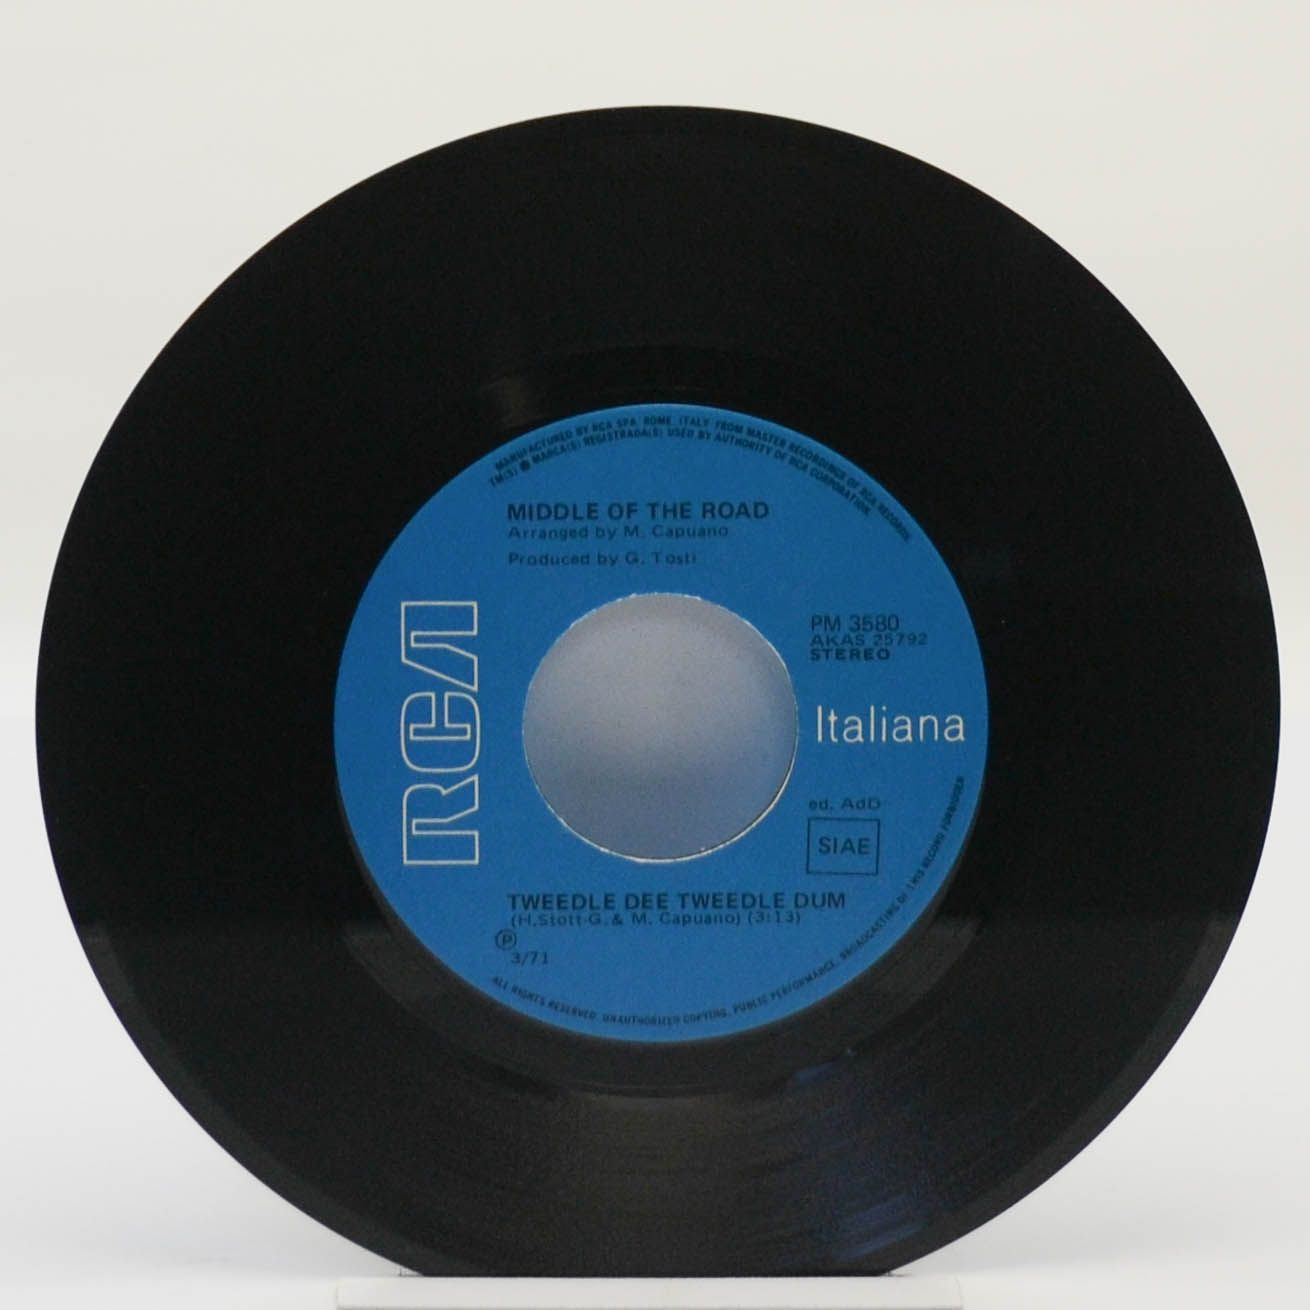 Tweedle Dee Tweedle Dum / Give It Time (single), 1971